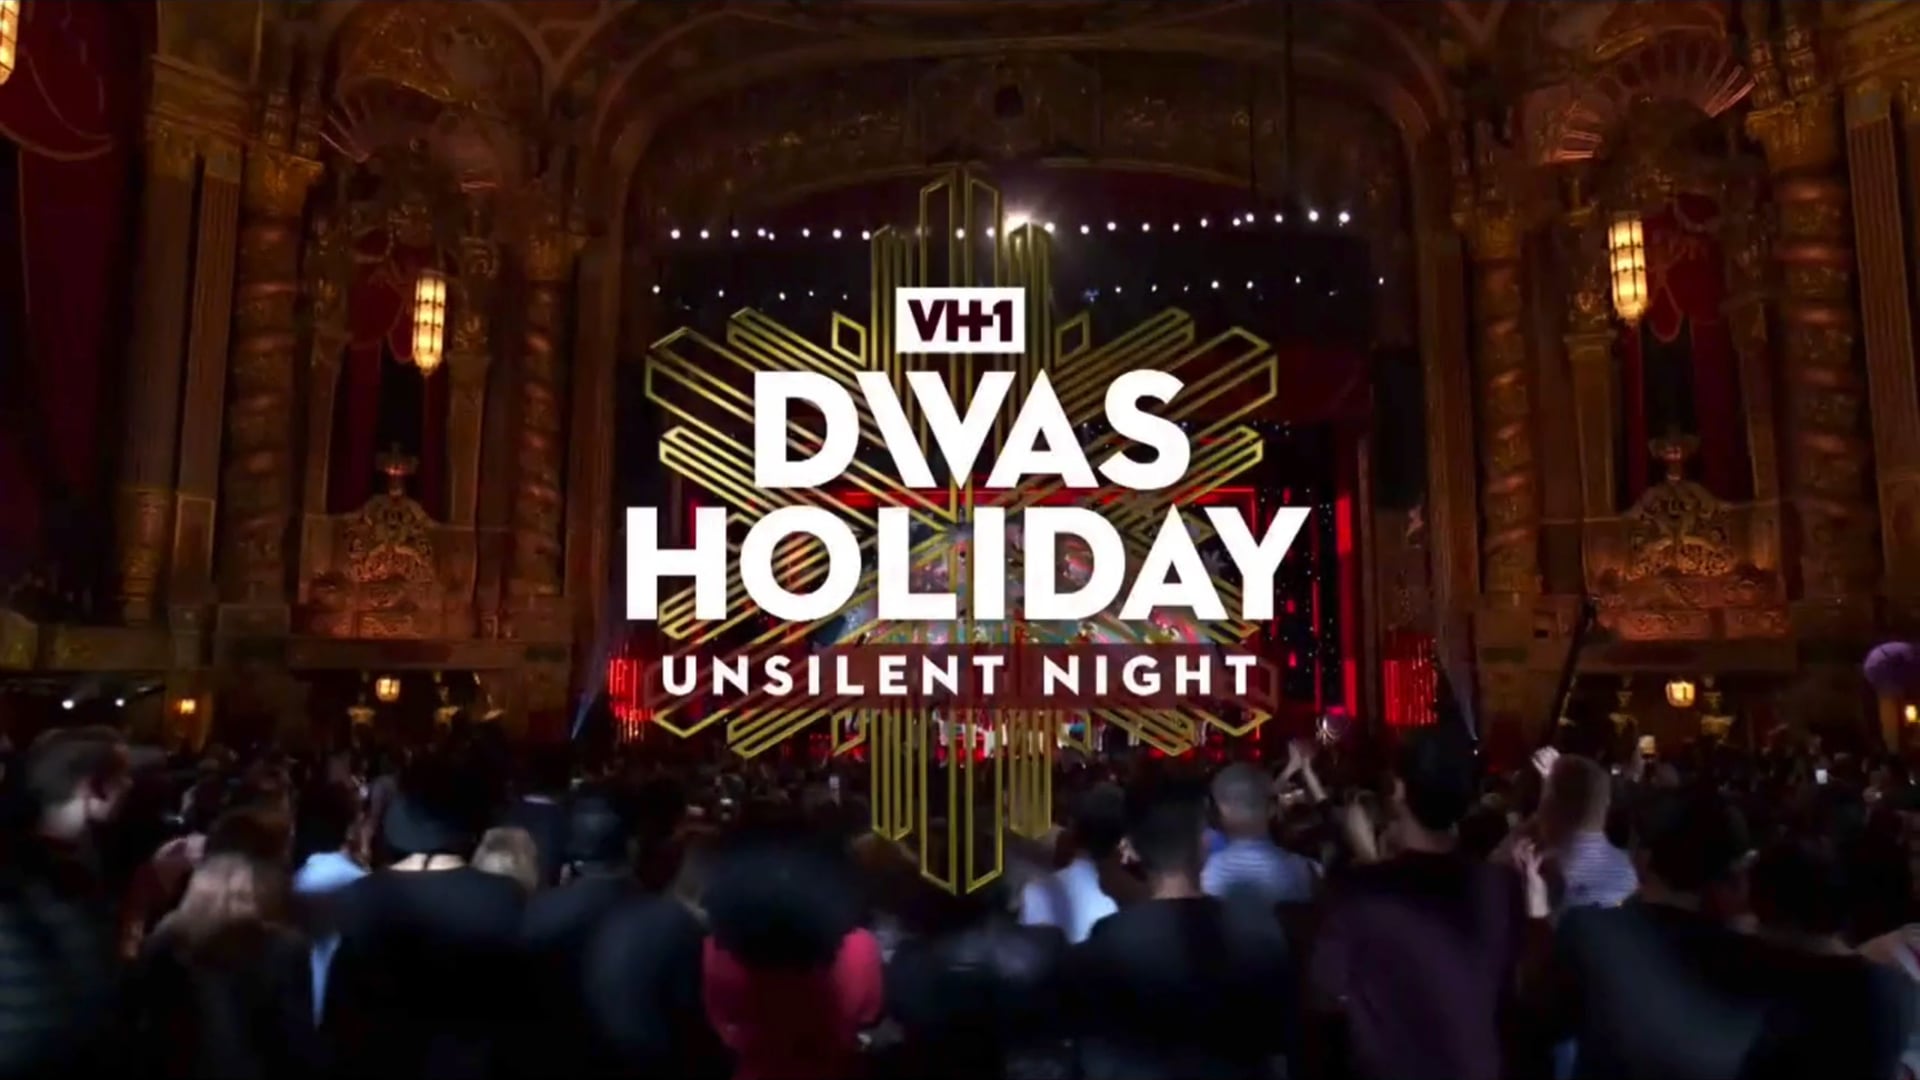 VH1 Divas "Unsilent Night"